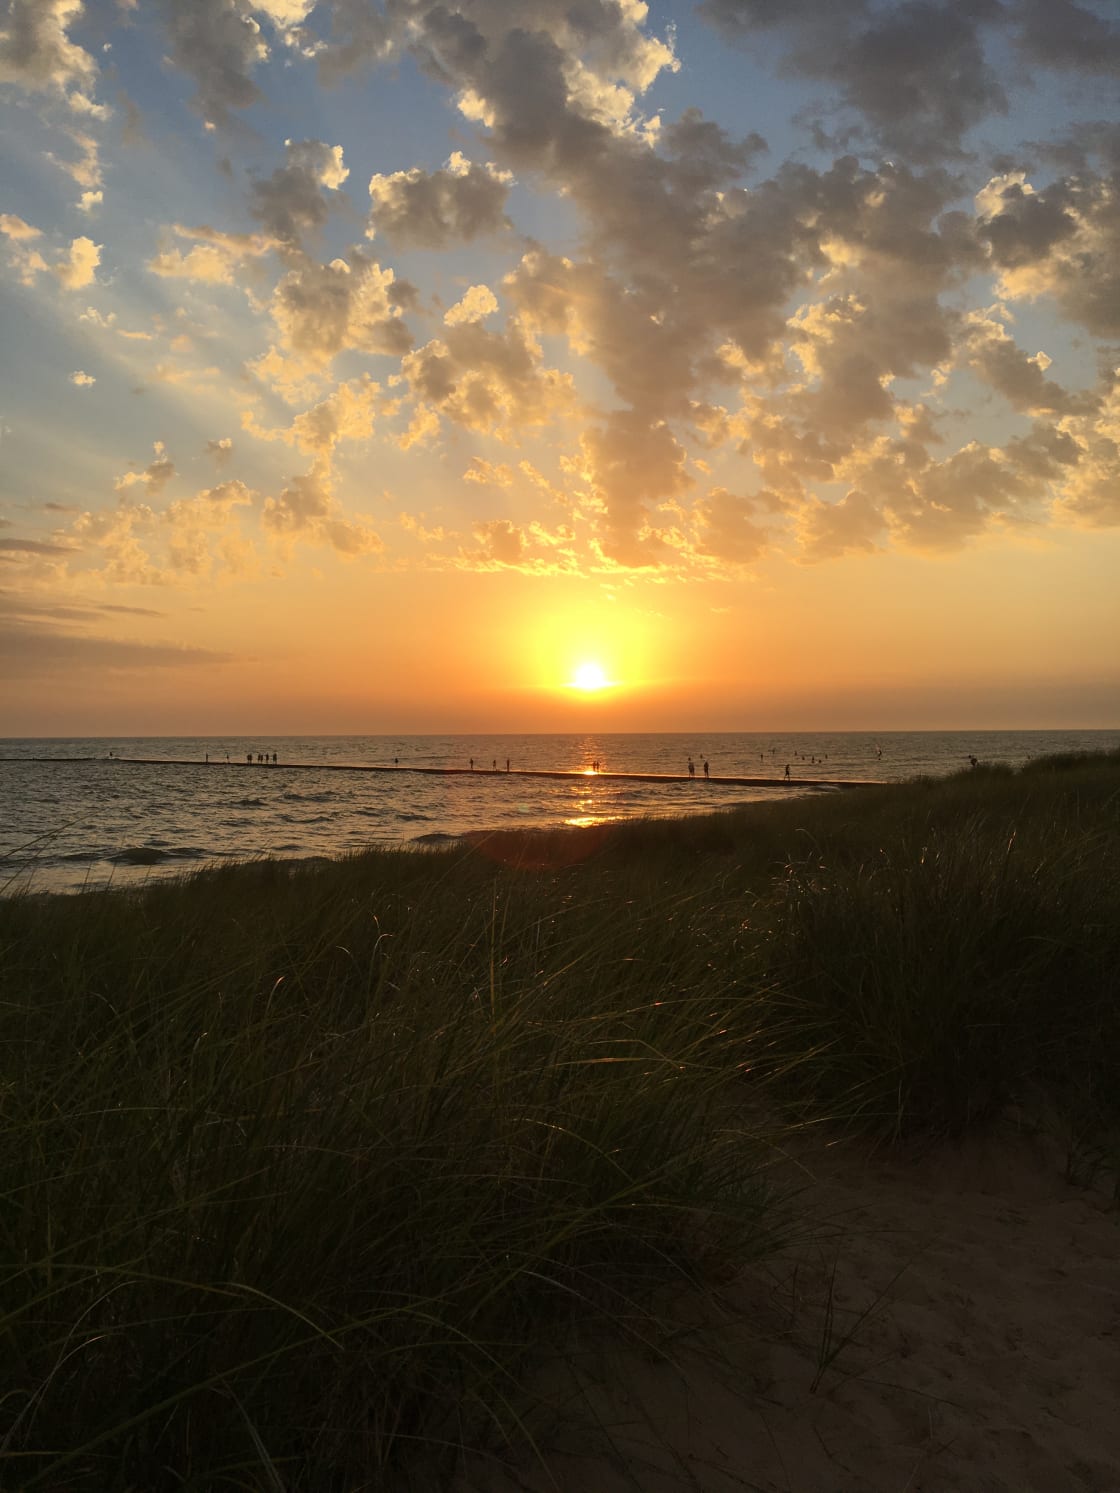 This side of Lake Michigan has wonderful sunsets.